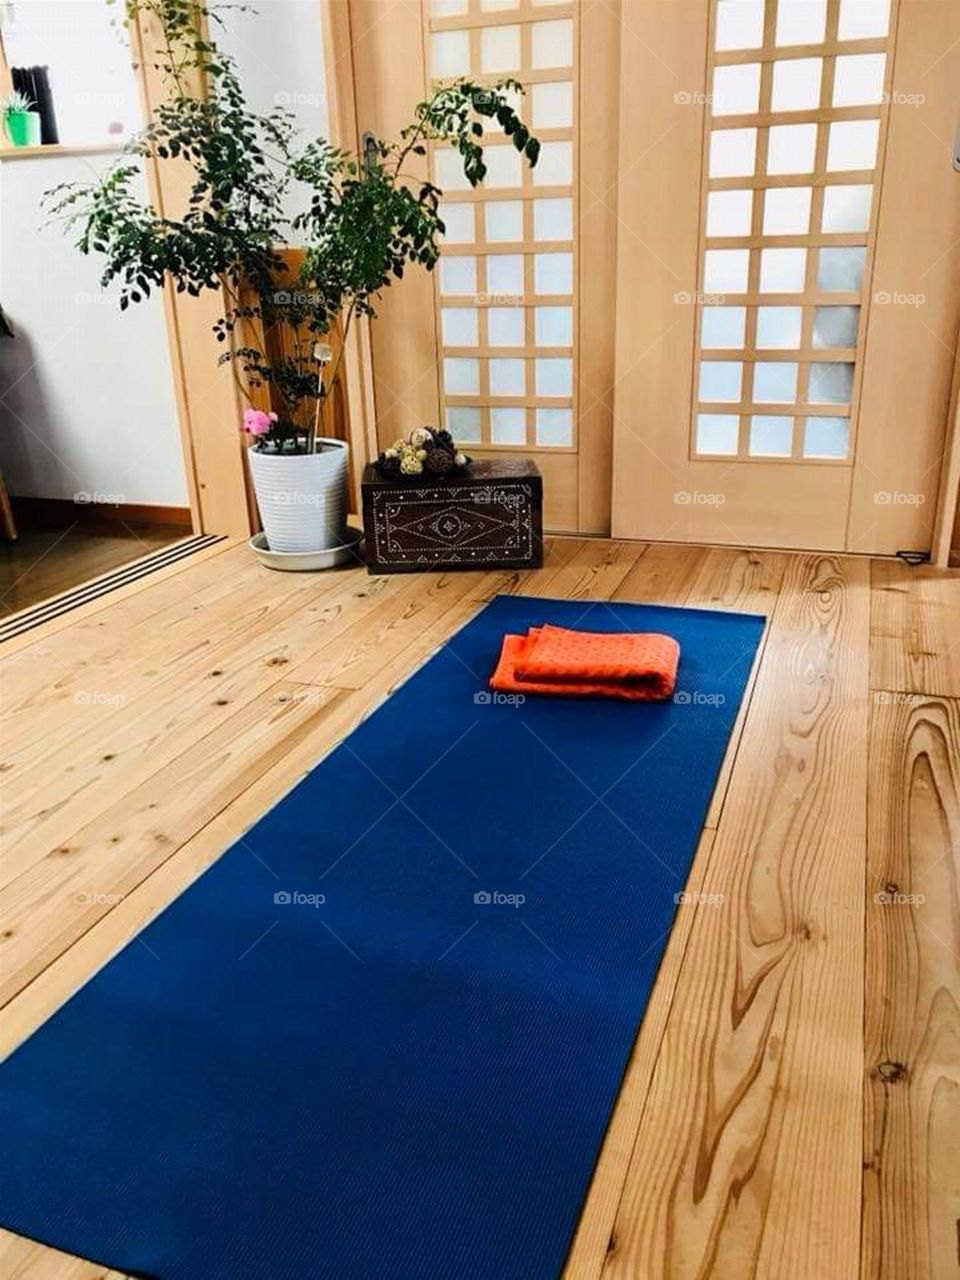 The Yoga Room